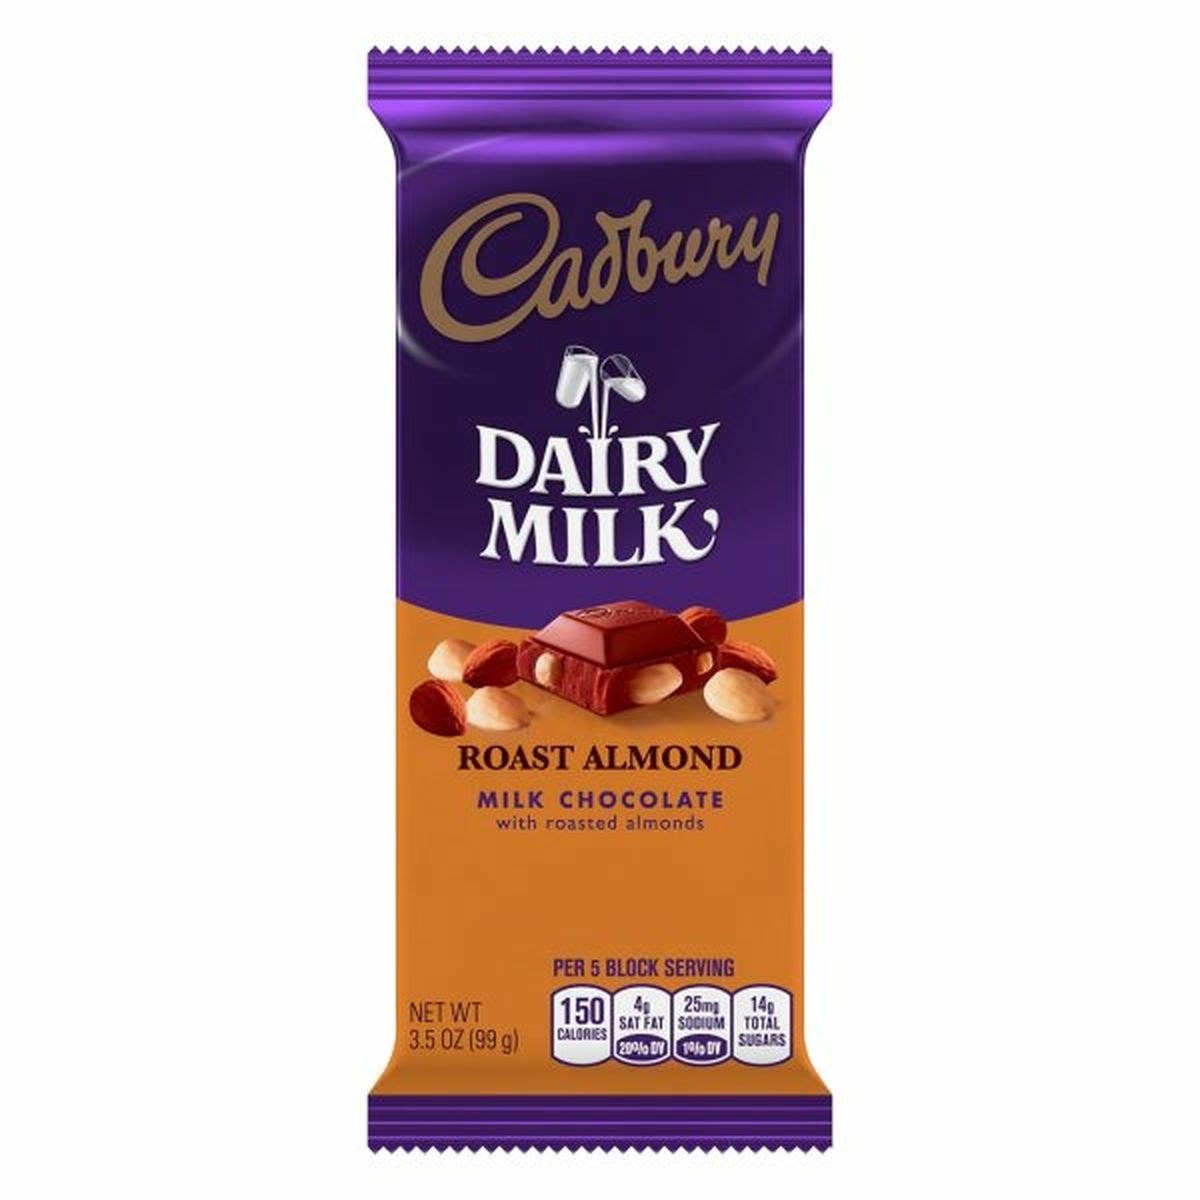 Calories in Cadbury Milk Chocolate, Roast Almond